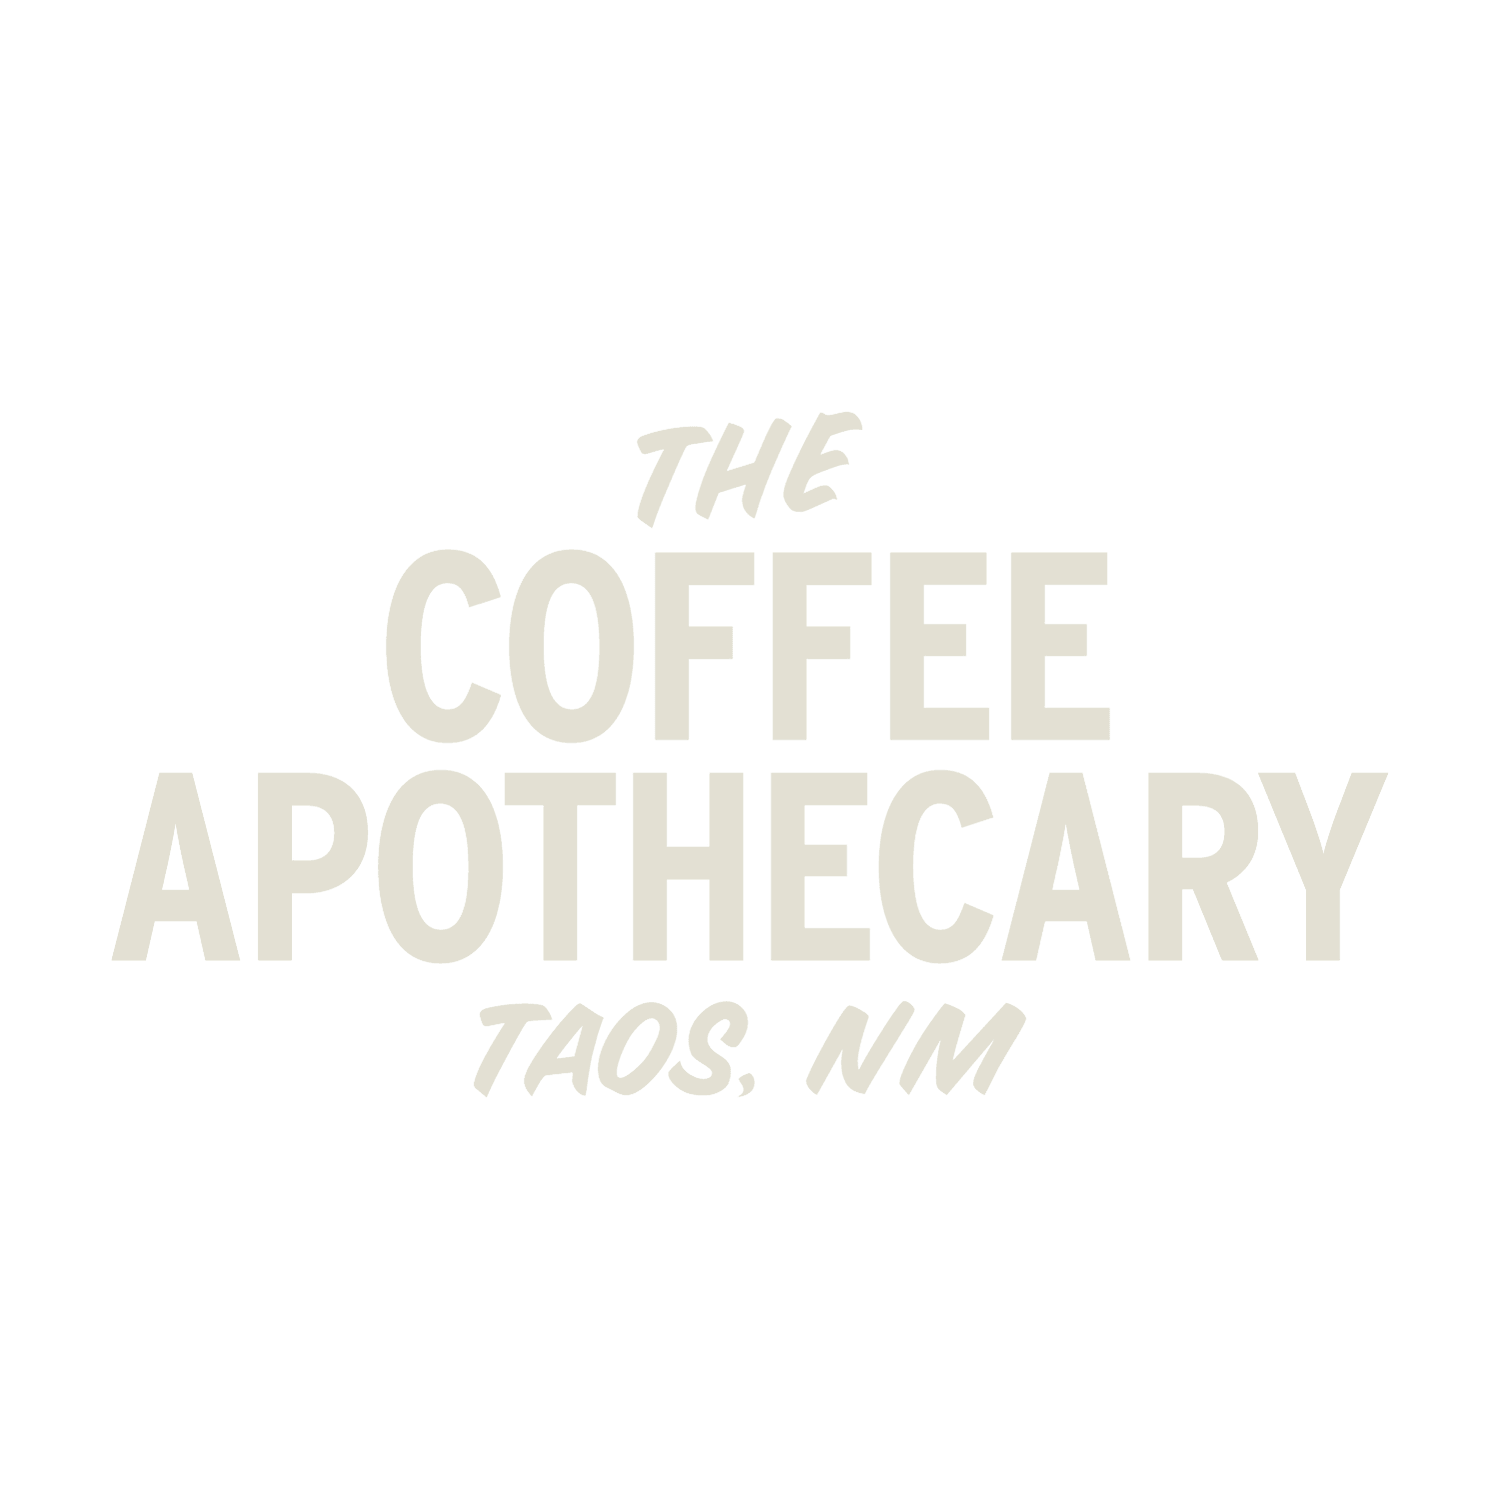 The Coffee Apothecary logo